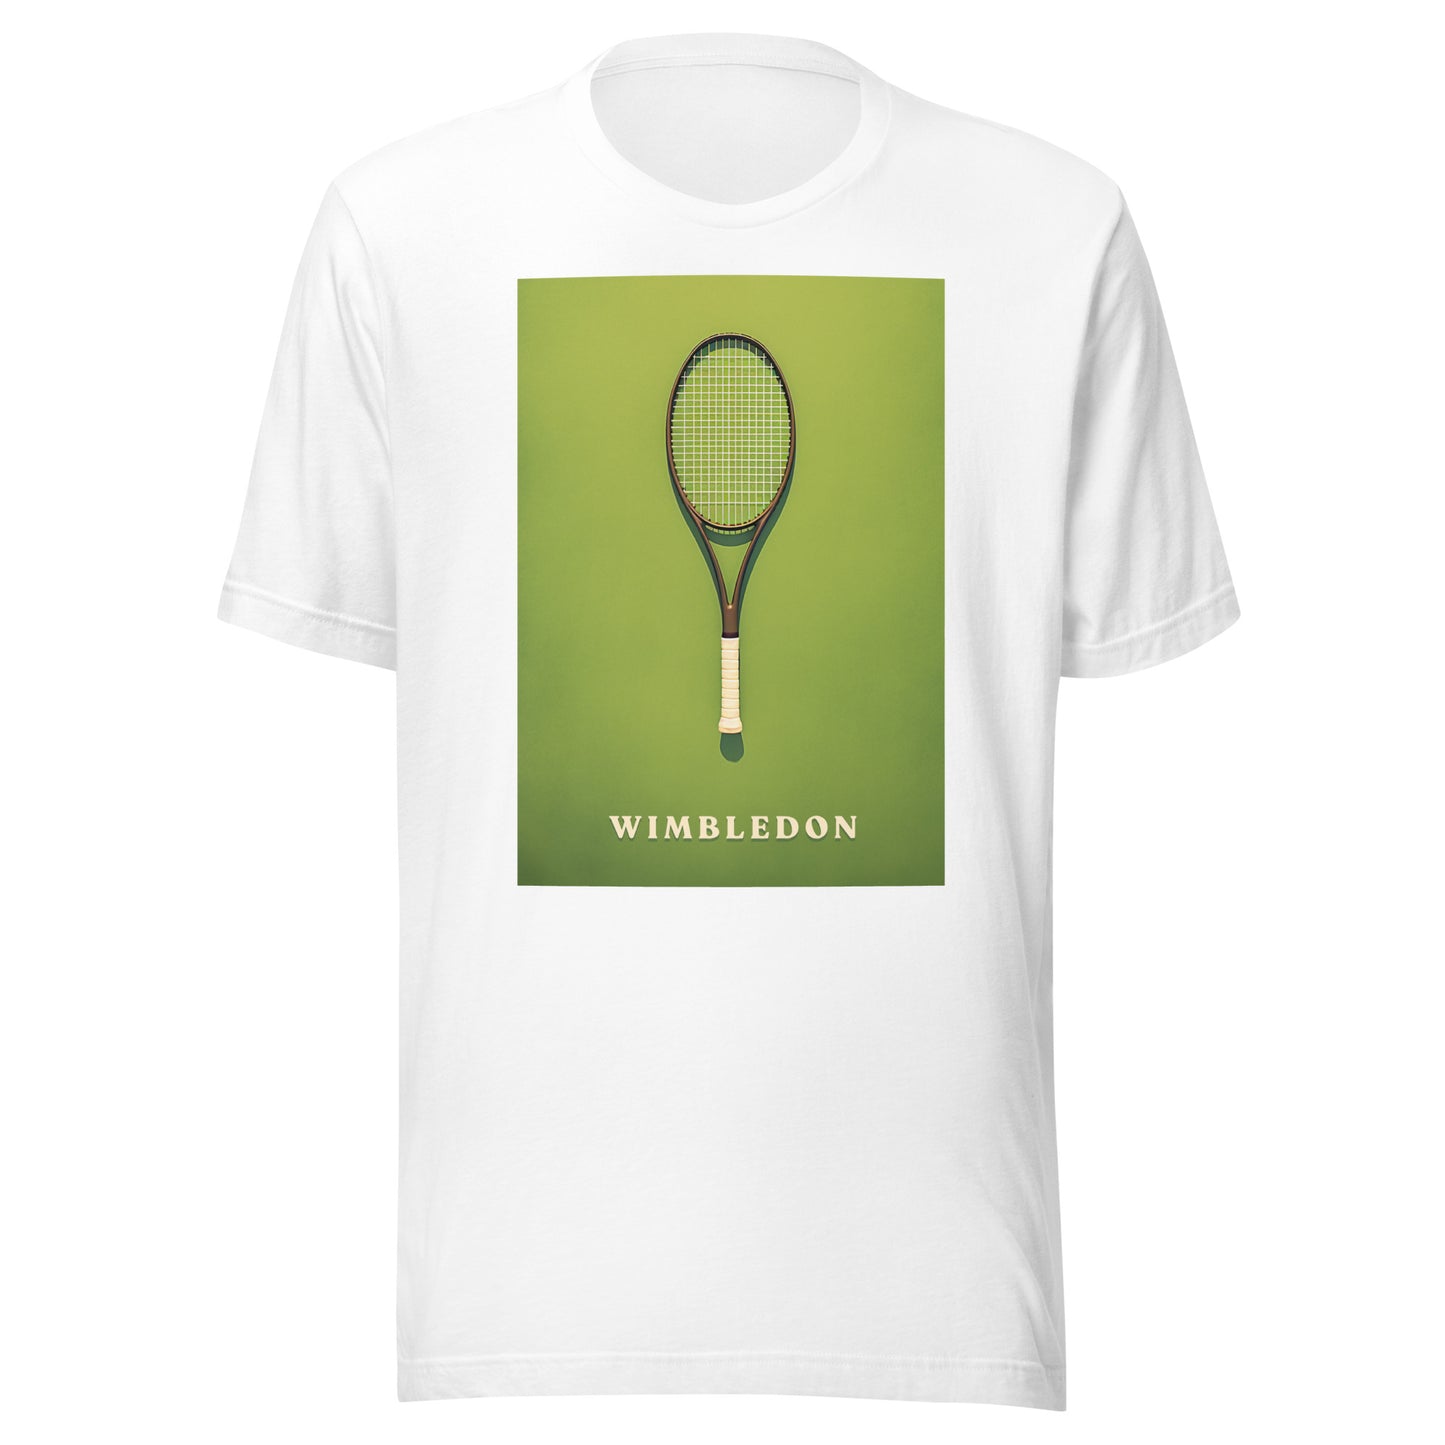 Wimbledon Minimal Elegance Tee